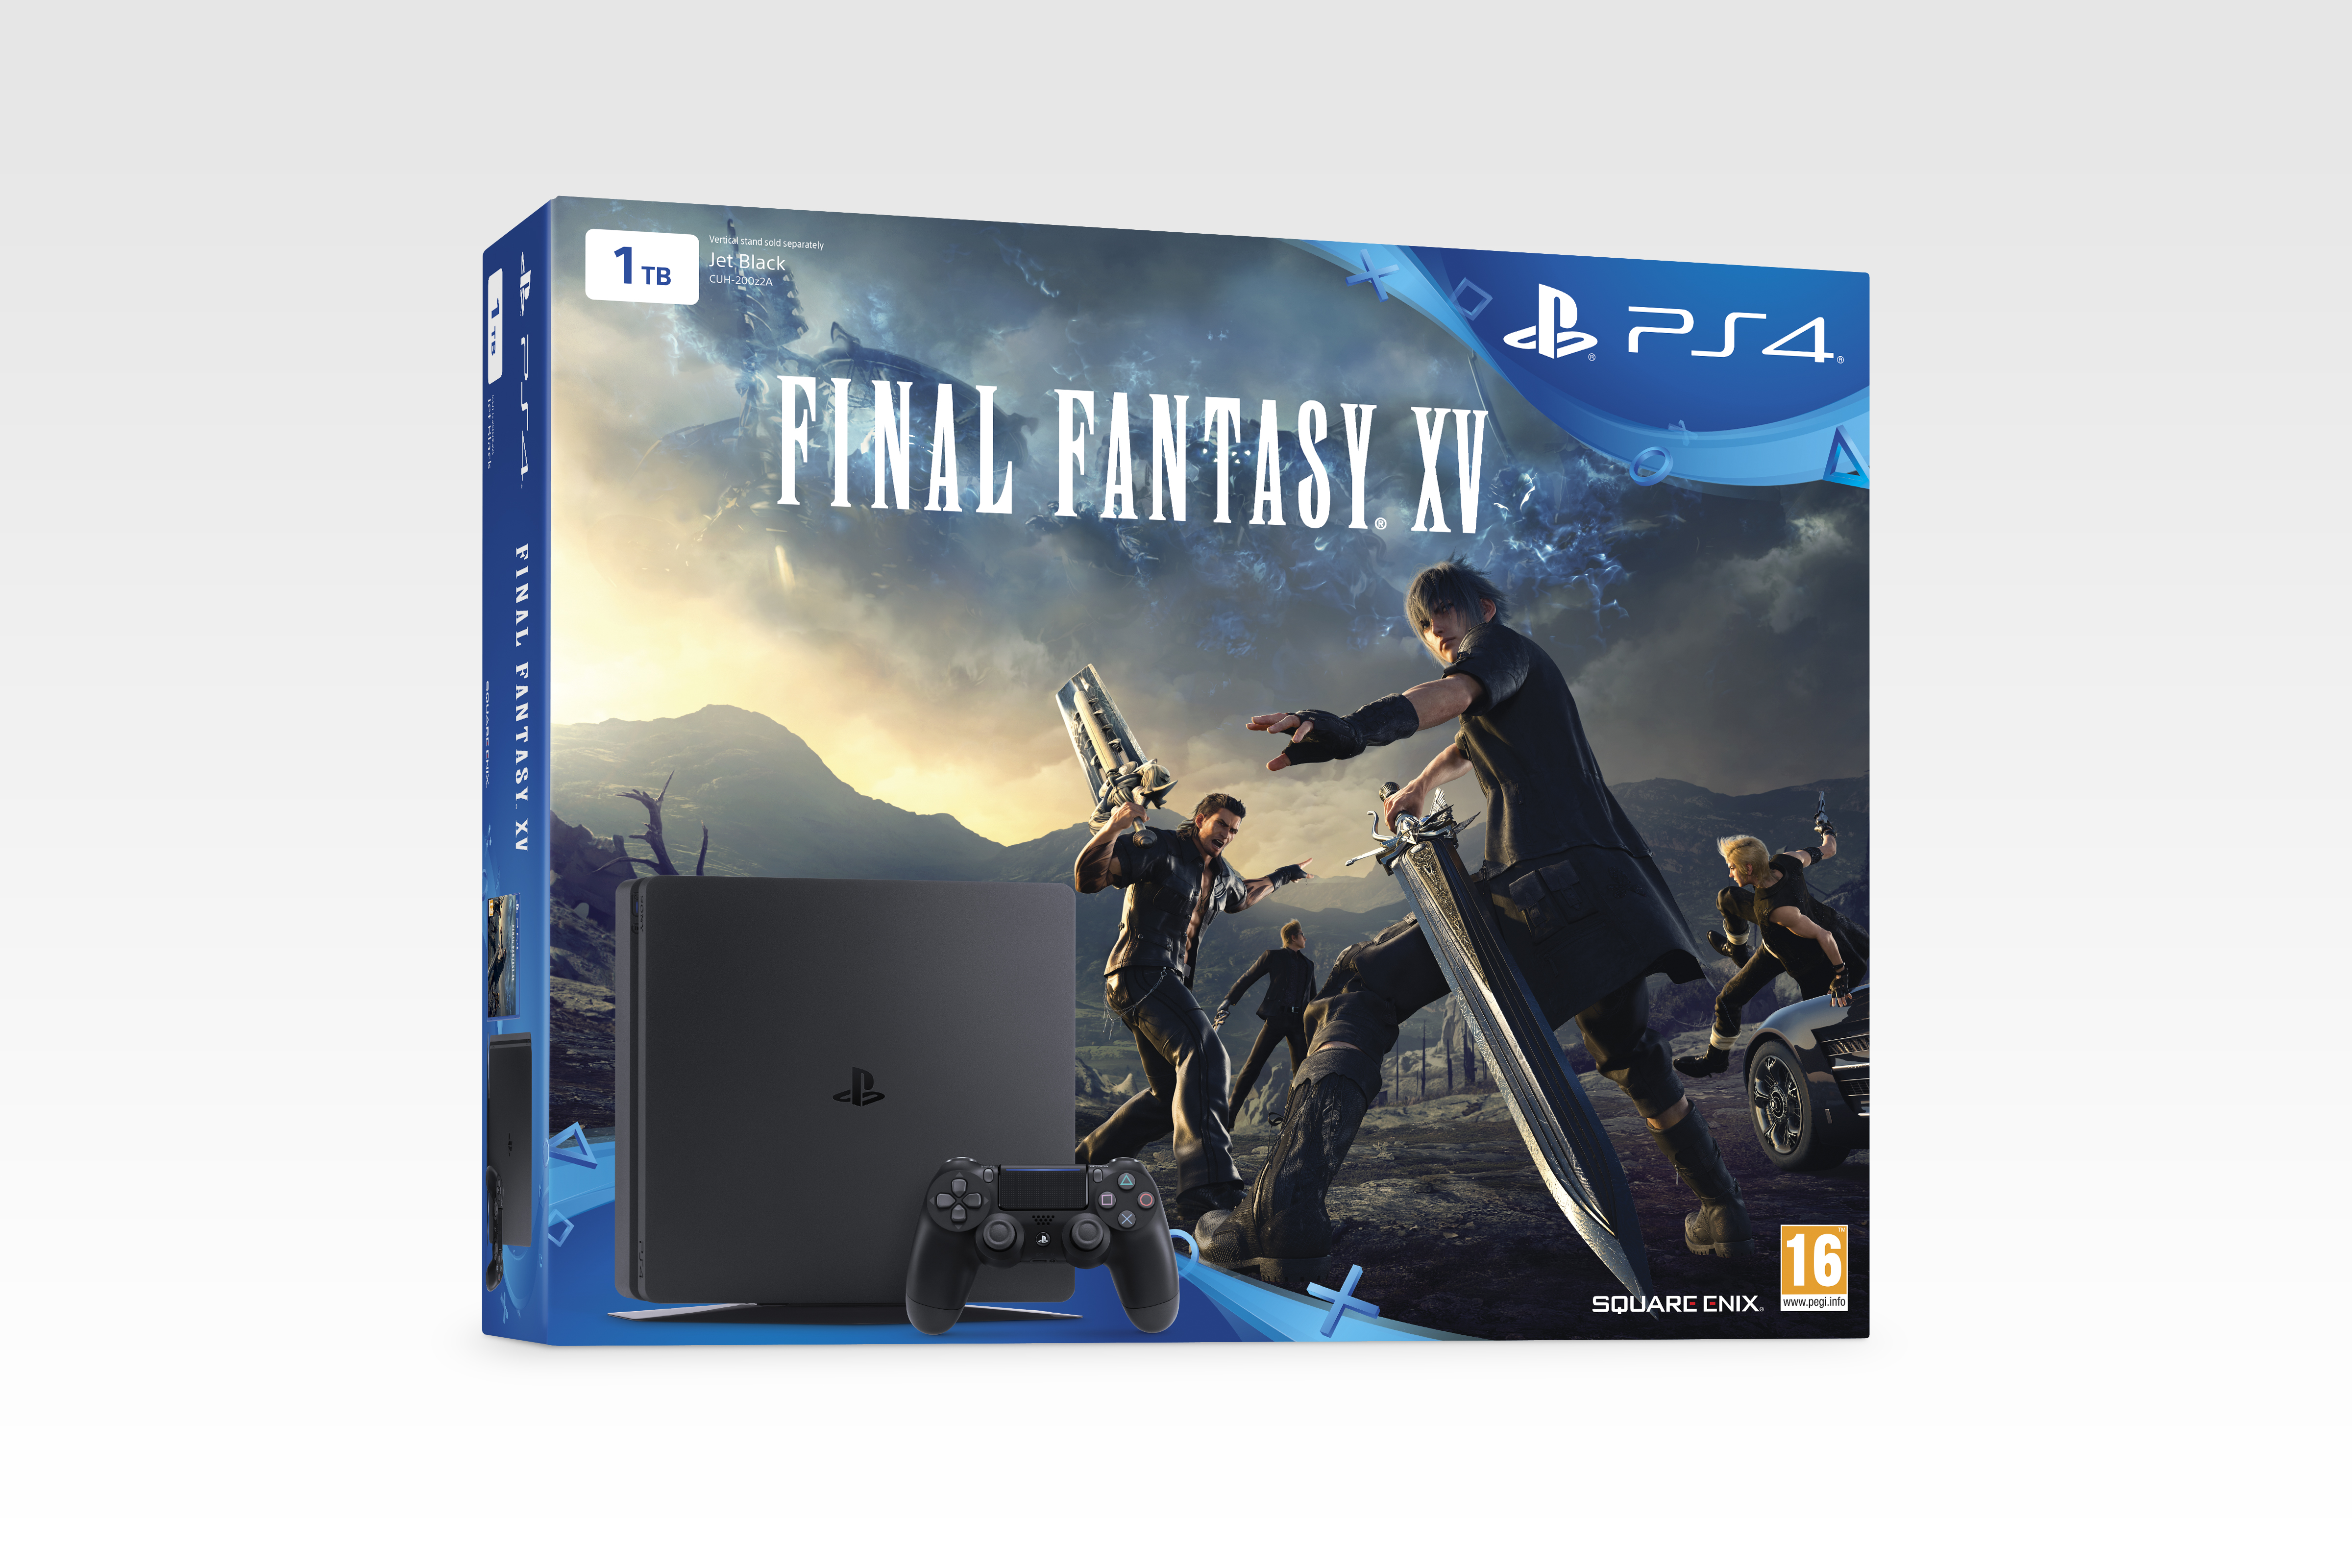 Limited Edition Final Fantasy XV PS4 available this November 